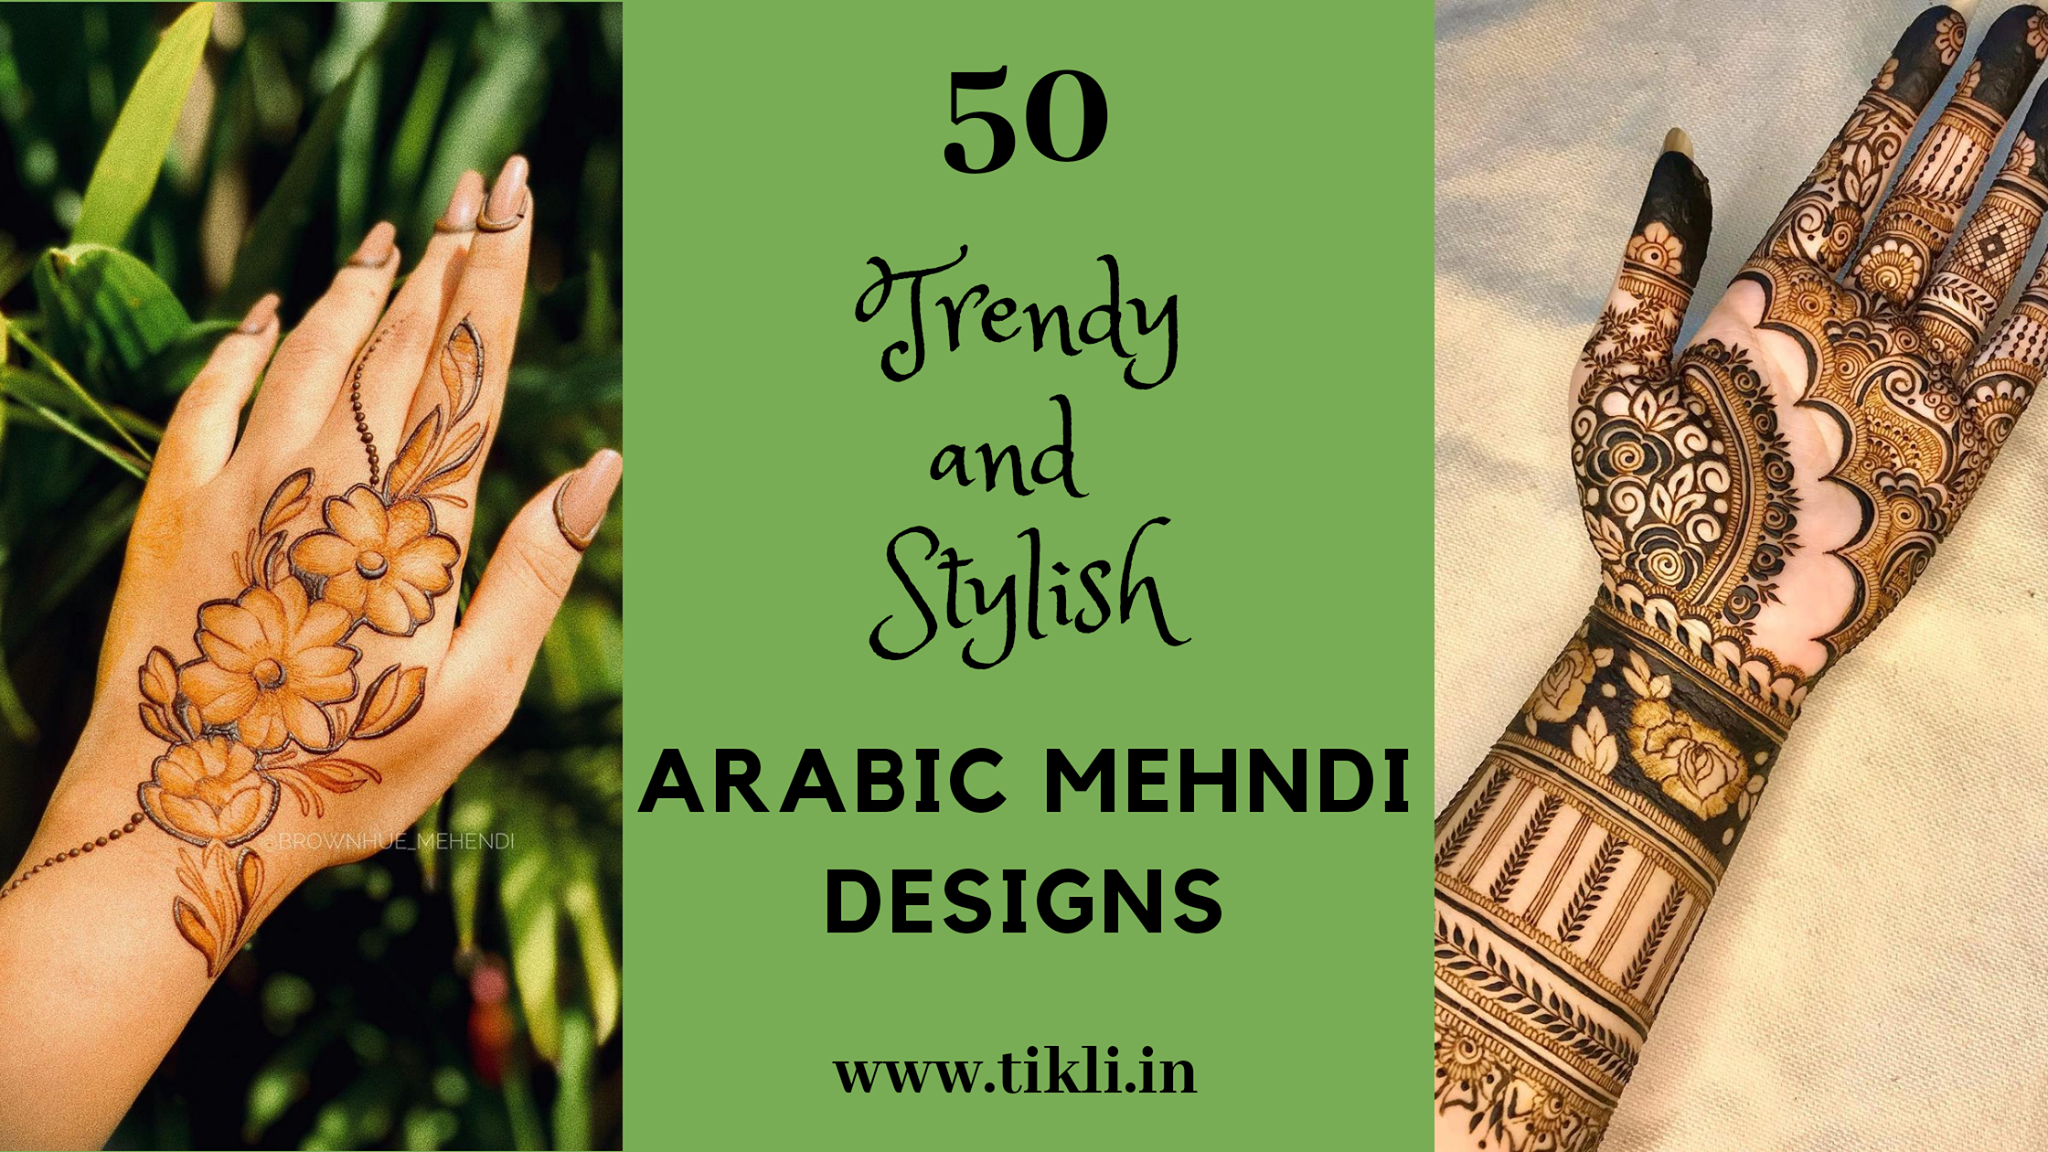 Simple Mehndi Designs [ Best 300 ] Hands Mehndi Photo | Mehndi Easy | 2023